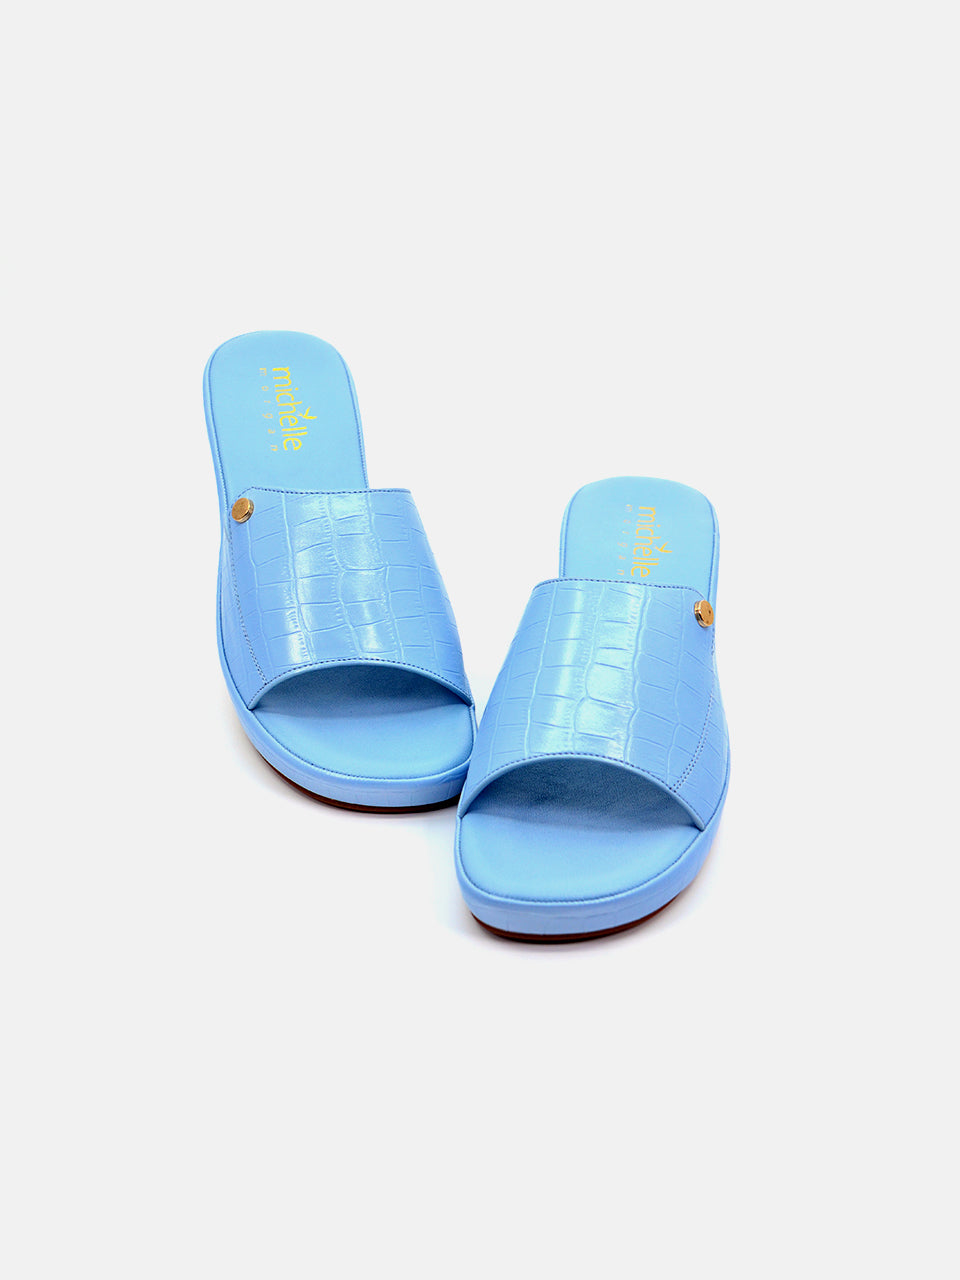 Michelle Morgan 114ZD215 Women's Heeled Sandals #color_Blue